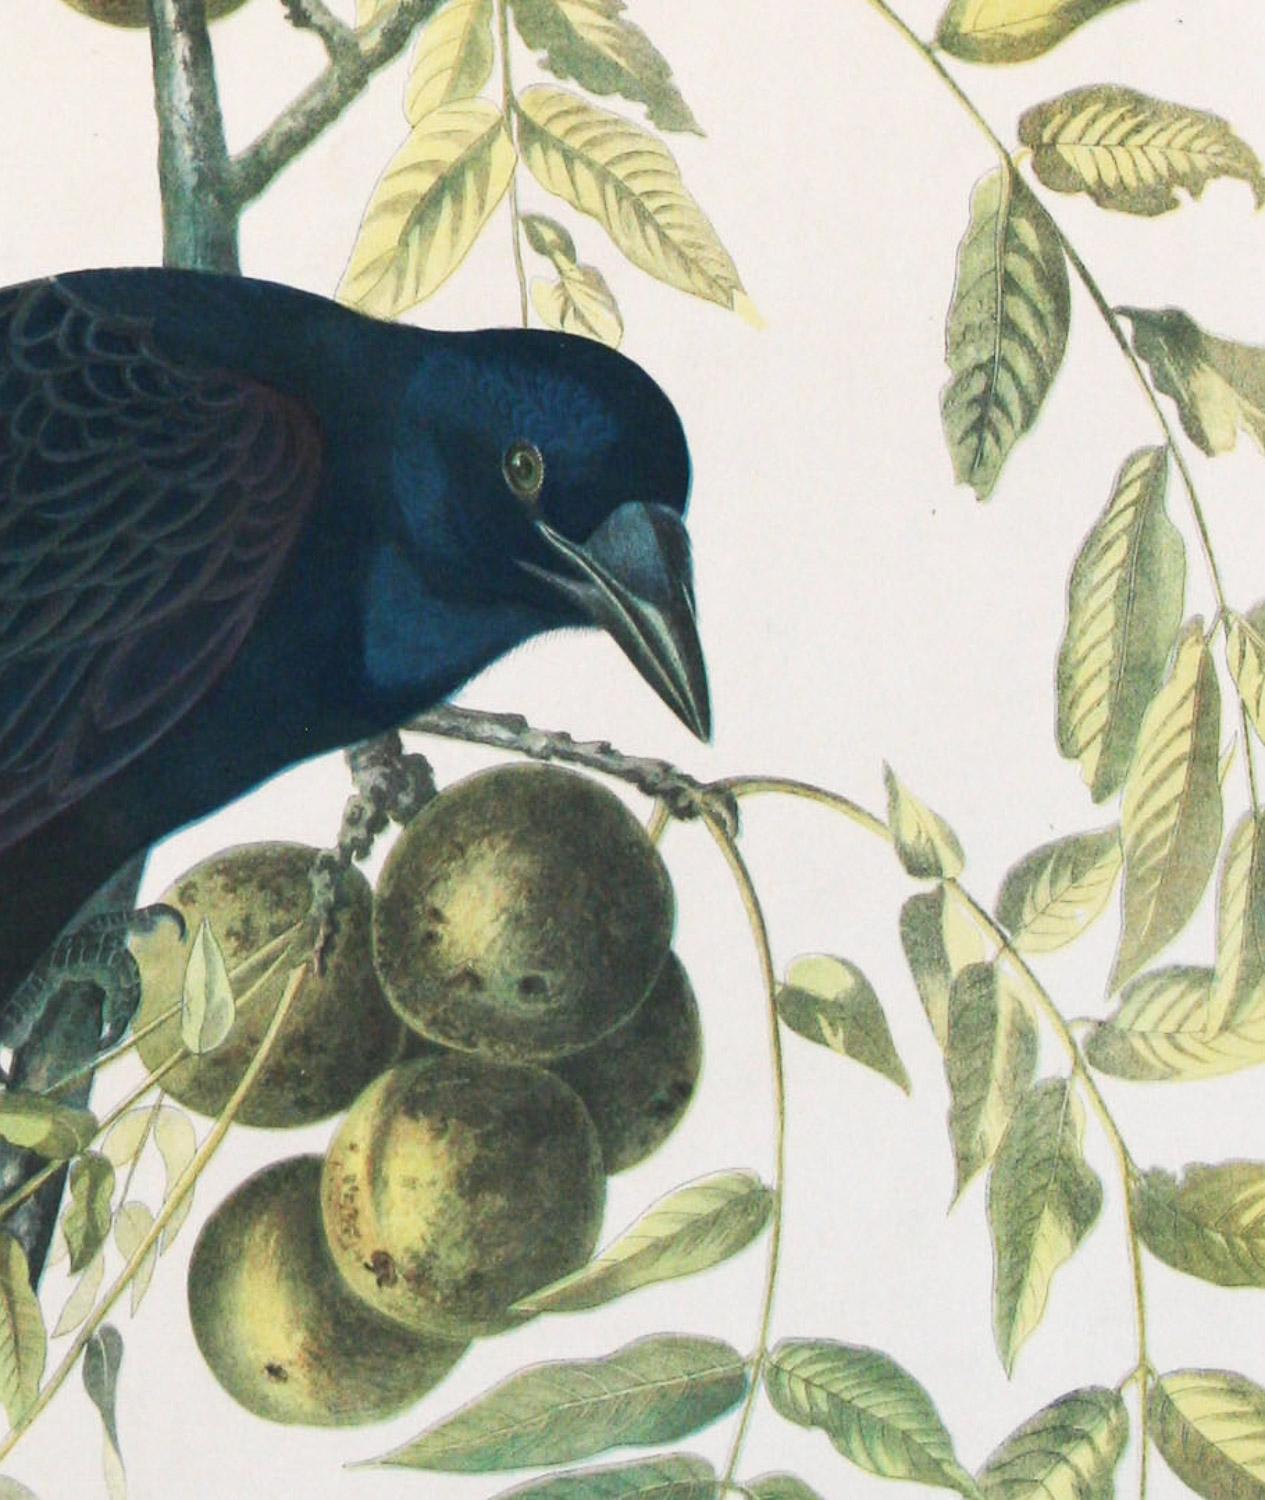 American Crow 1858 Chromolithograph by J.J. Audubon Plate, Julius Bien Edition - Naturalistic Print by John James Audubon